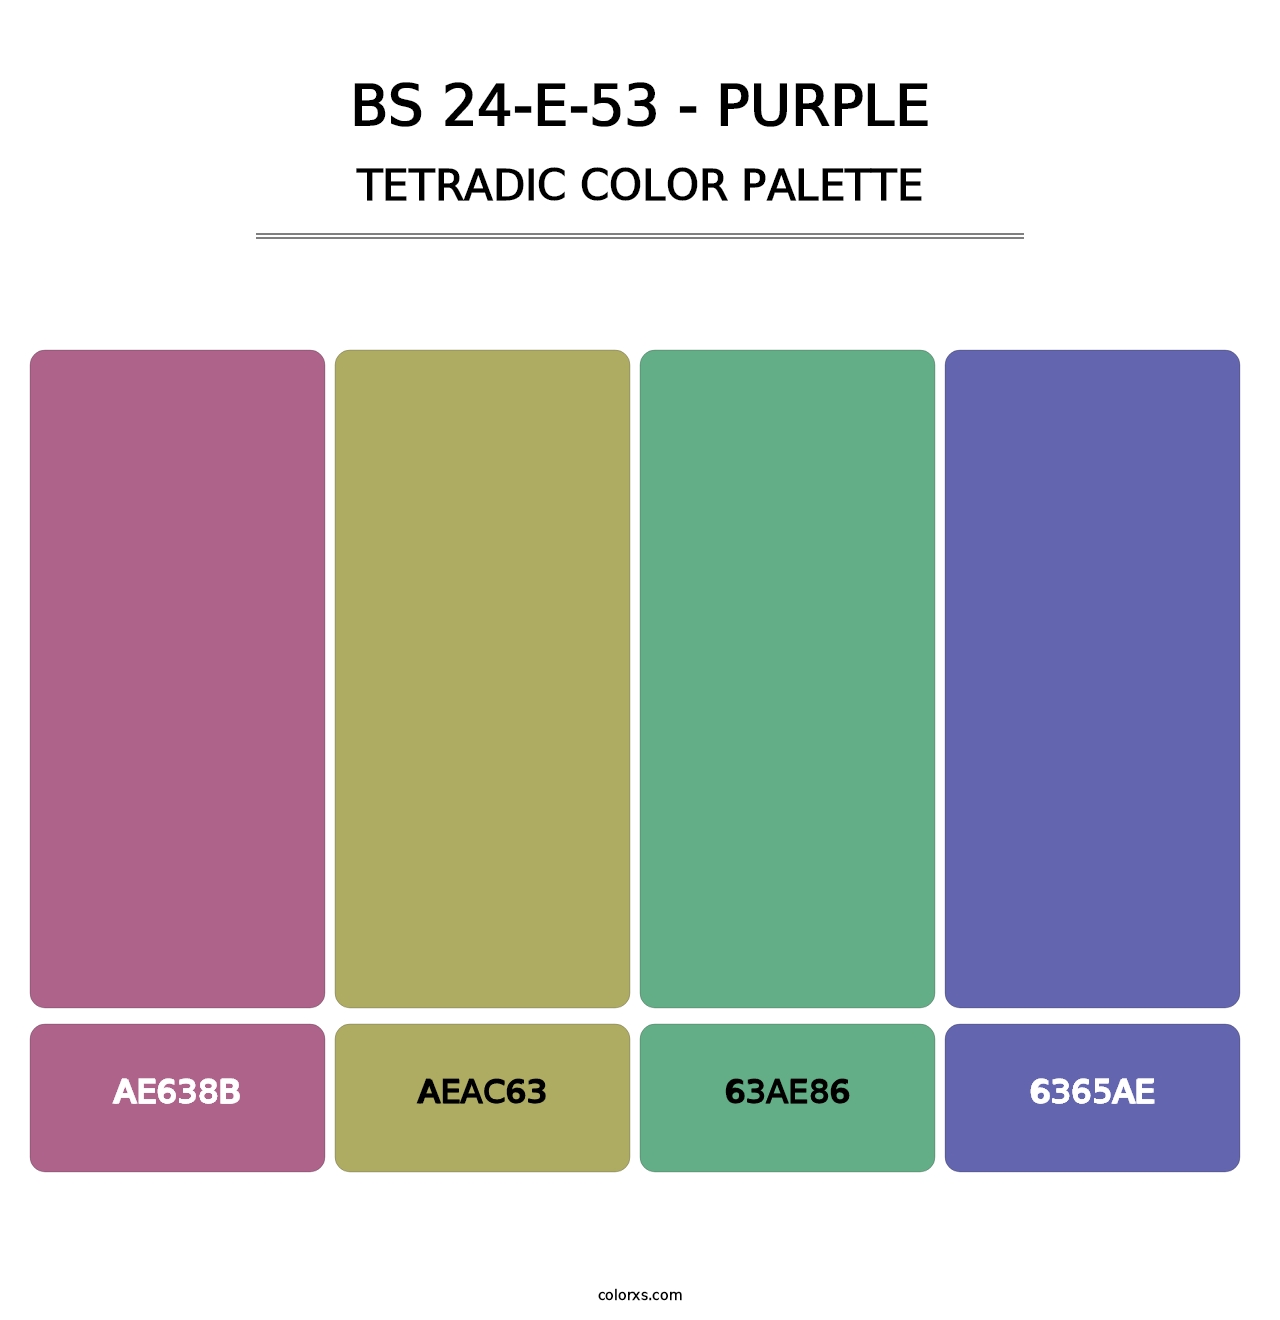 BS 24-E-53 - Purple - Tetradic Color Palette